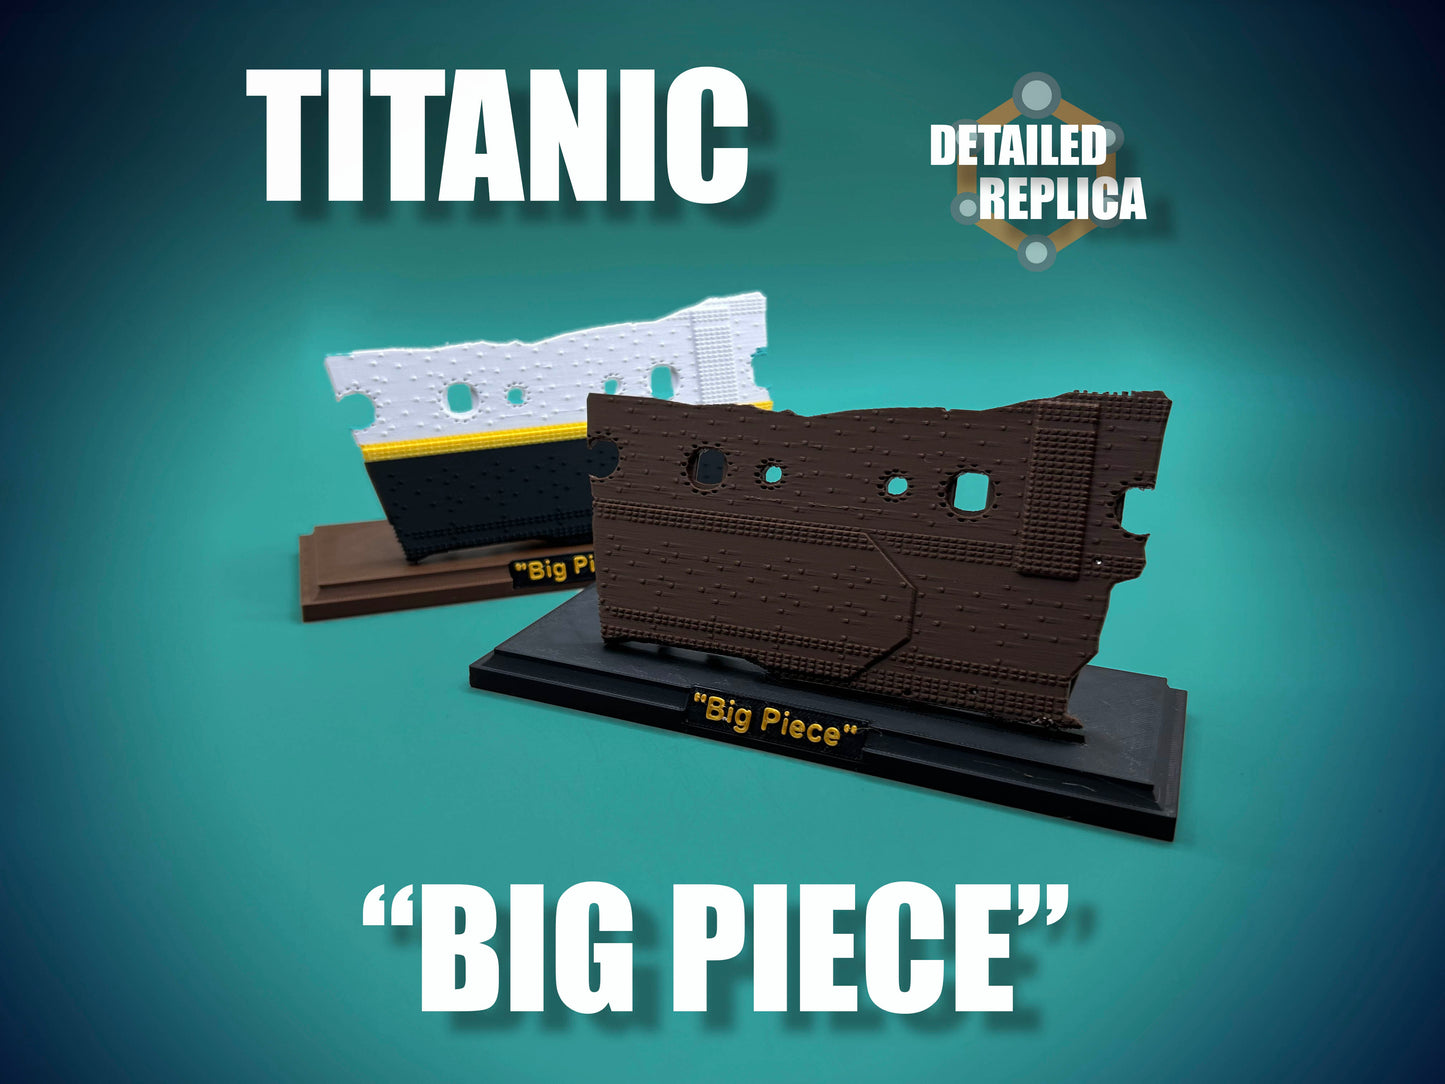 Titanic "BIG PIECE" Replica Model